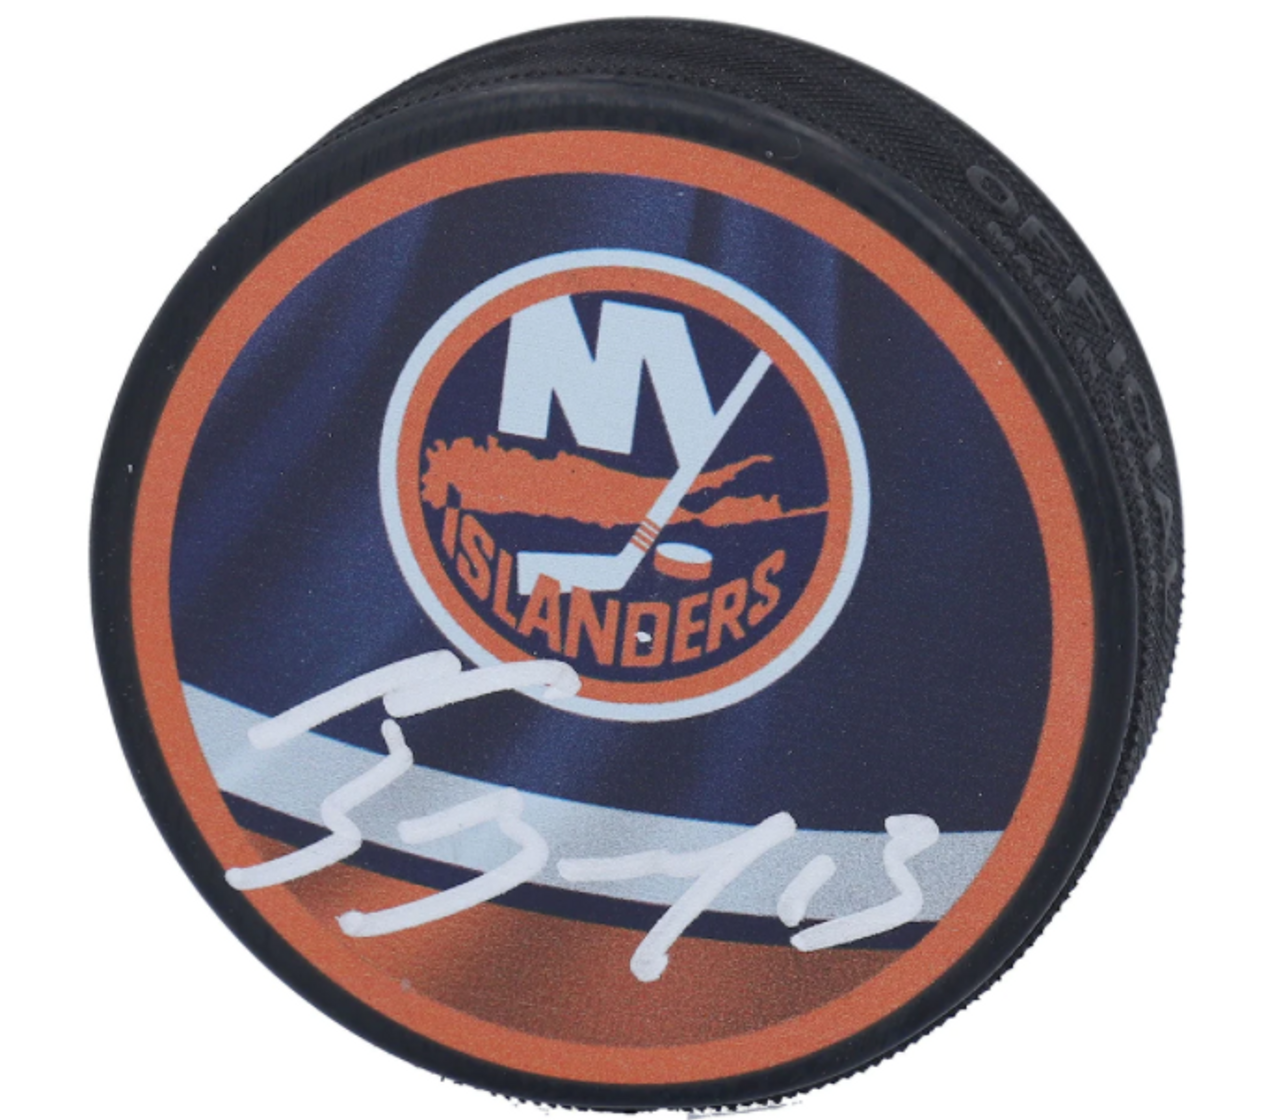 Autographed New York Islanders Mathew Barzal Fanatics Authentic